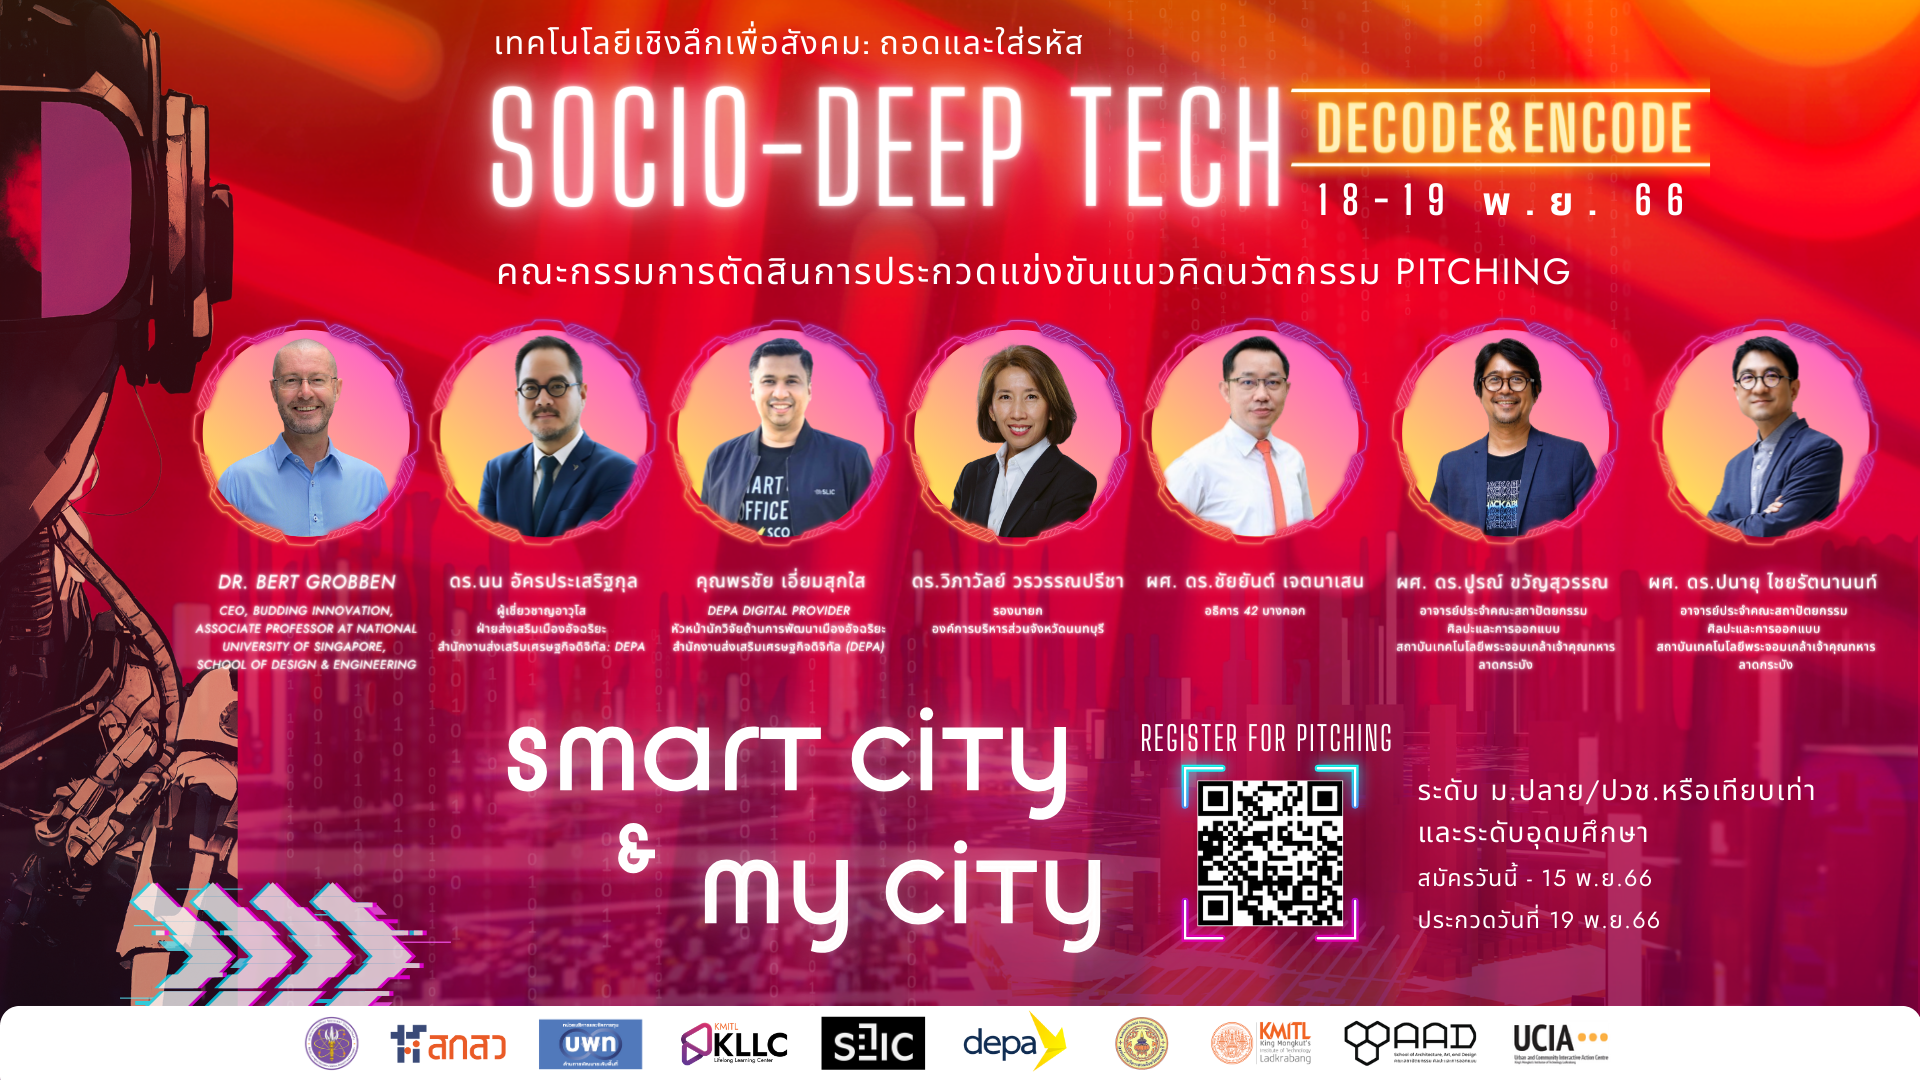 Socio-Deep tech: Decode and Encode